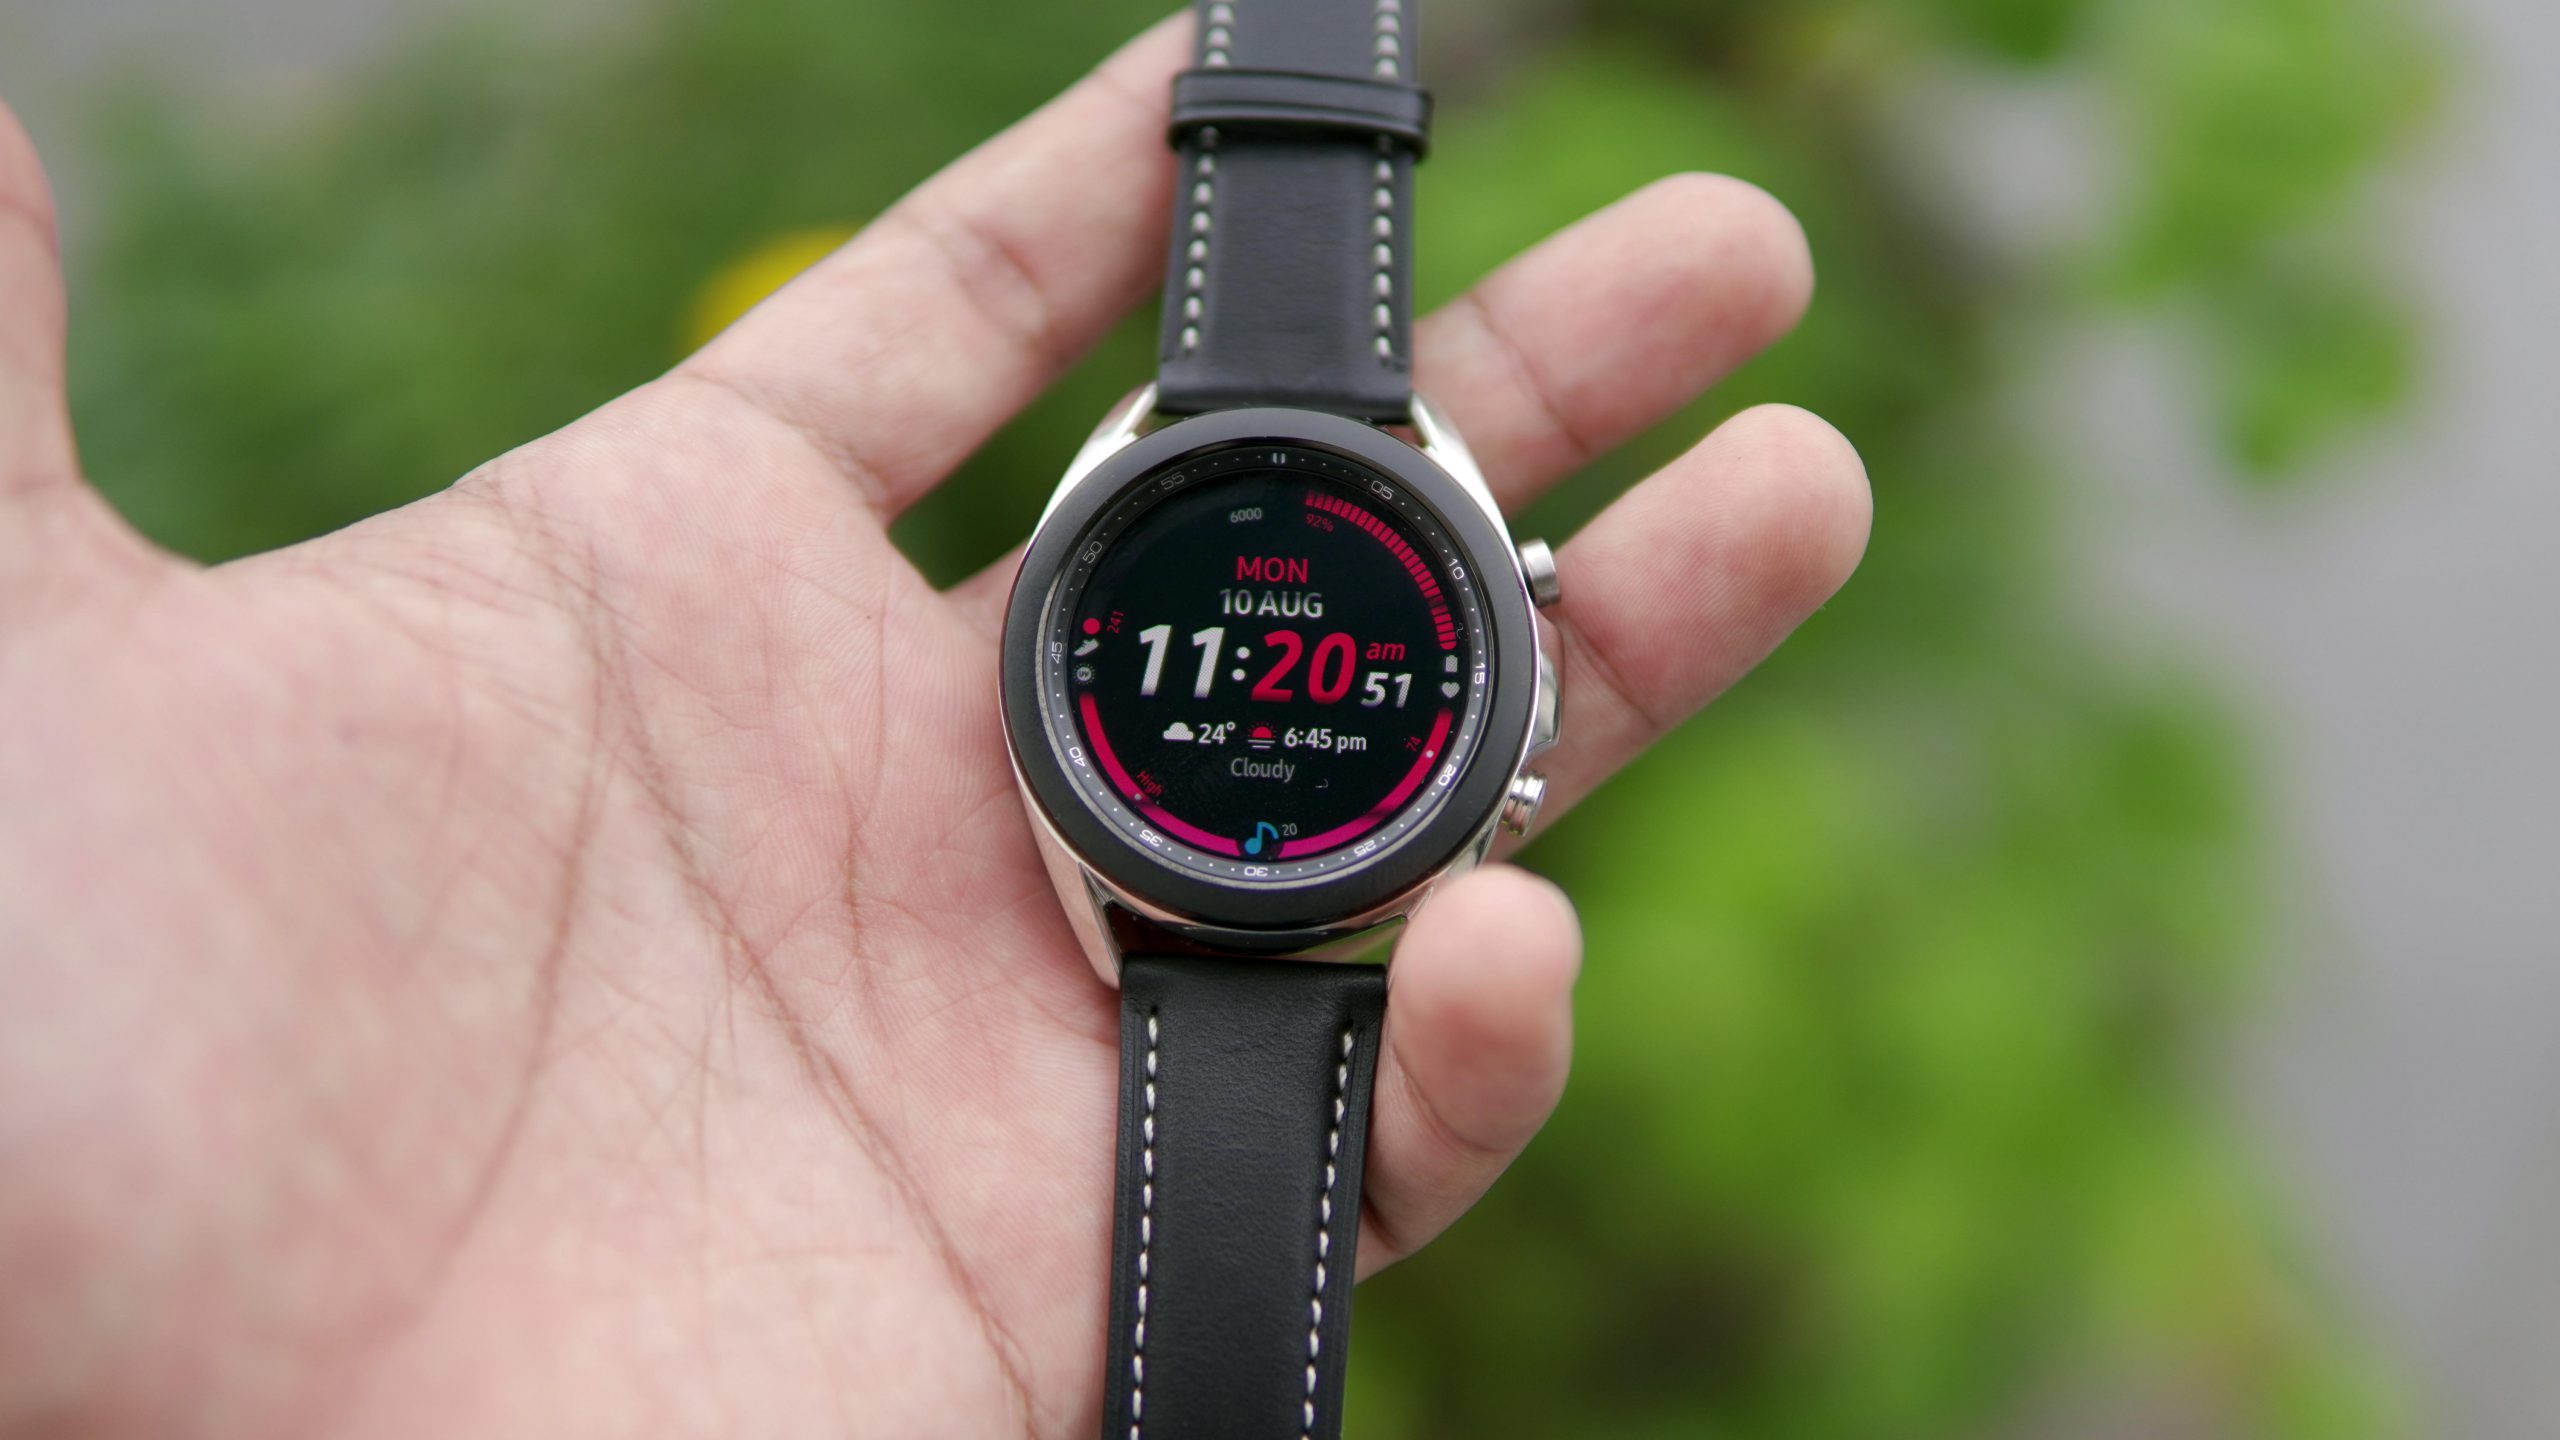  Samsung Galaxy Watch 3 price nepal